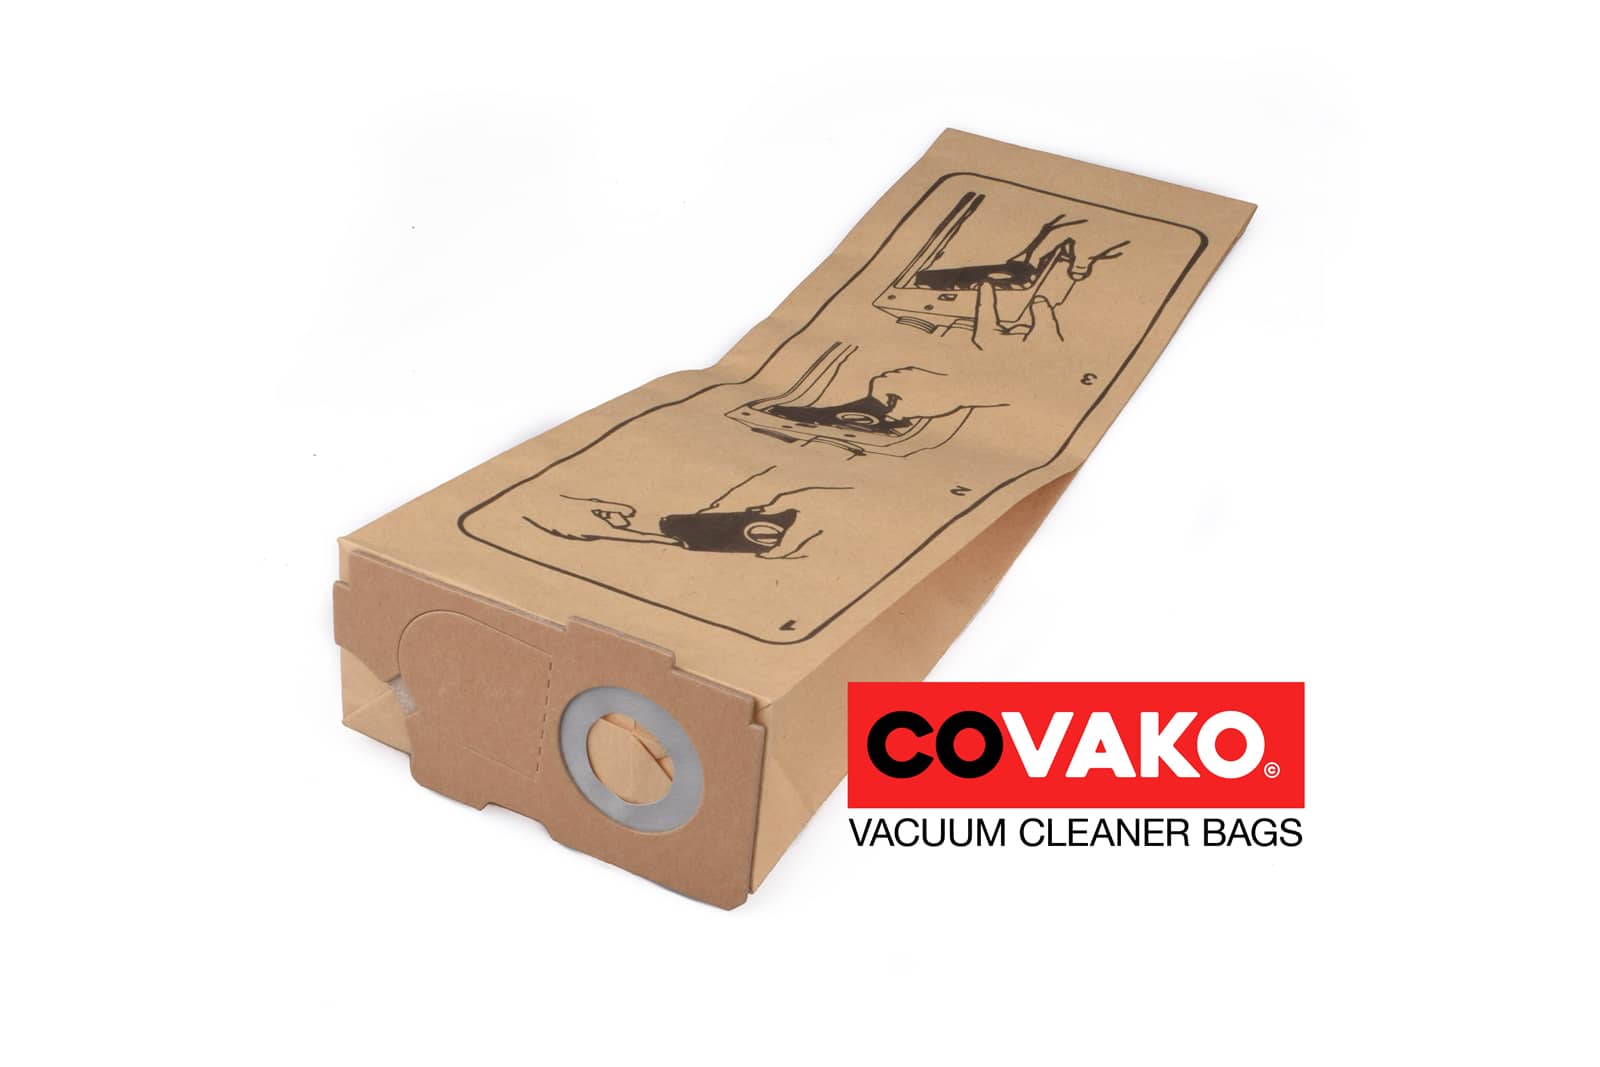 Columbus BS 360 / Paper - Columbus vacuum cleaner bags